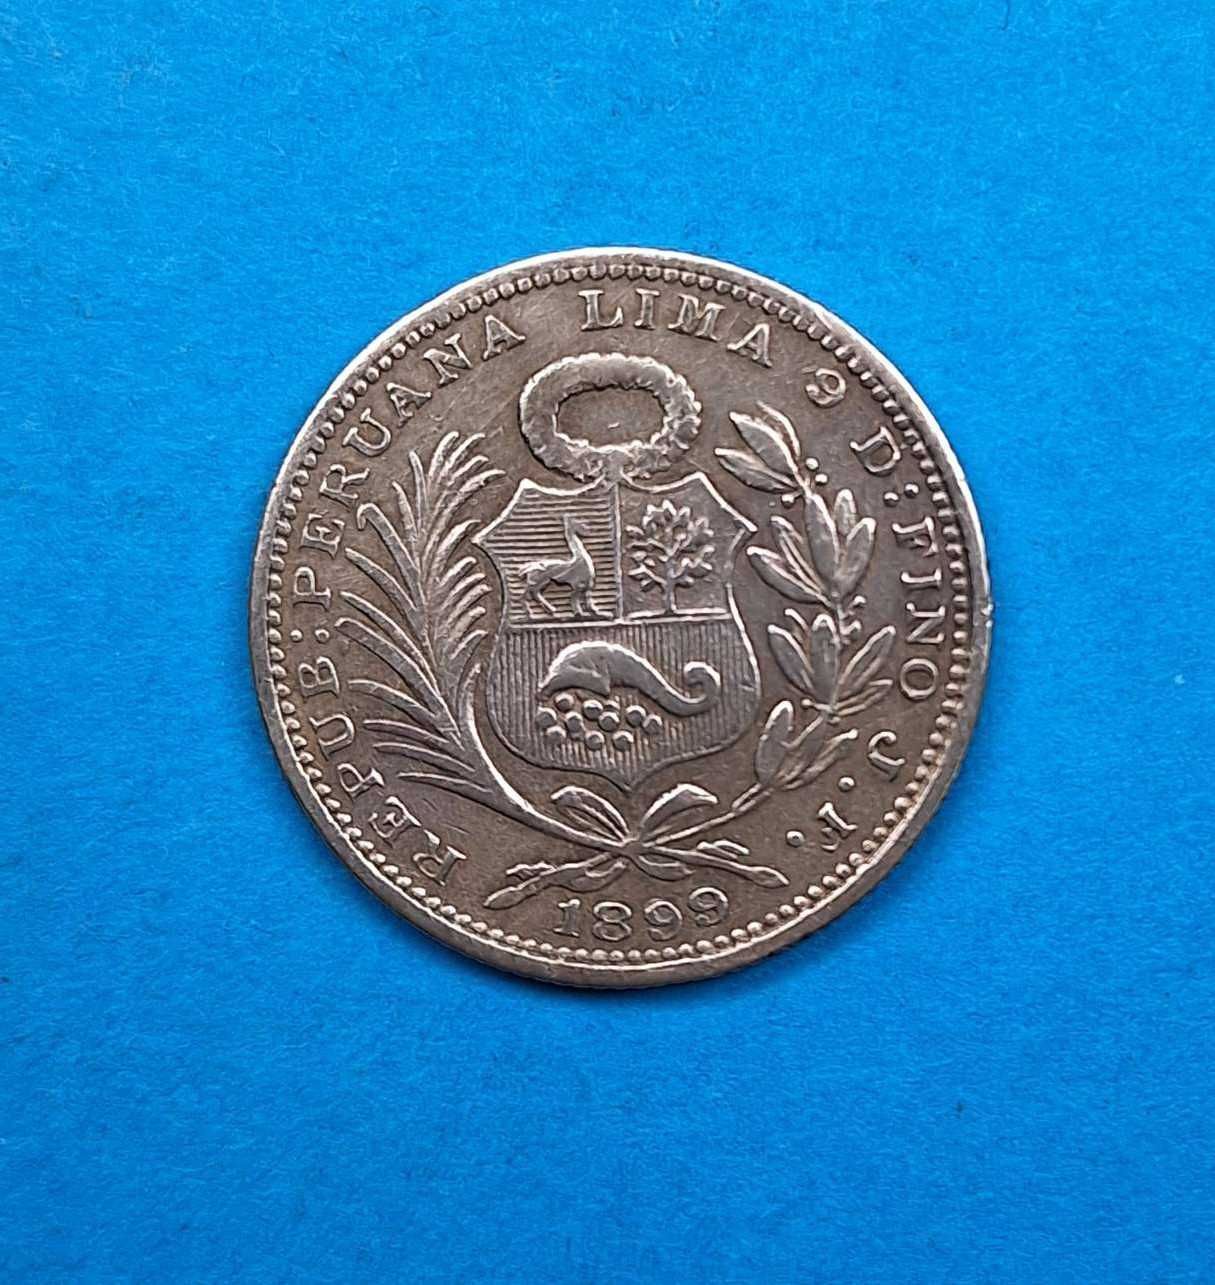 Peru 1/5 sola rok 1899, bardzo dobry stan, srebro 0,900